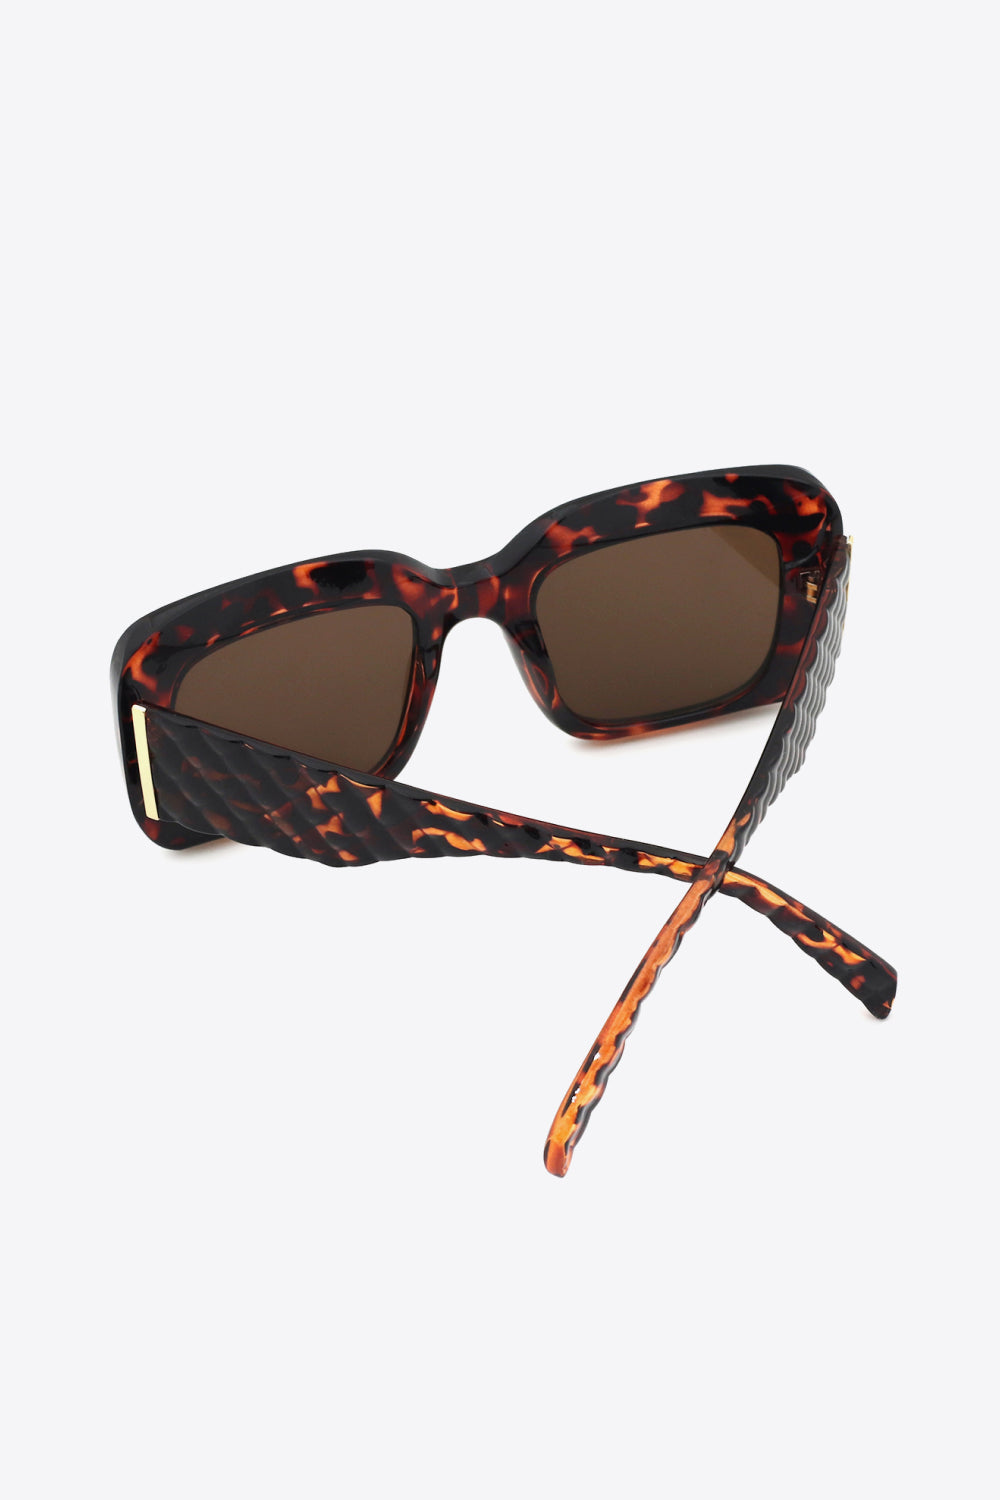 Square Polycarbonate UV400 Sunglasses - Sunglasses - FITGGINS